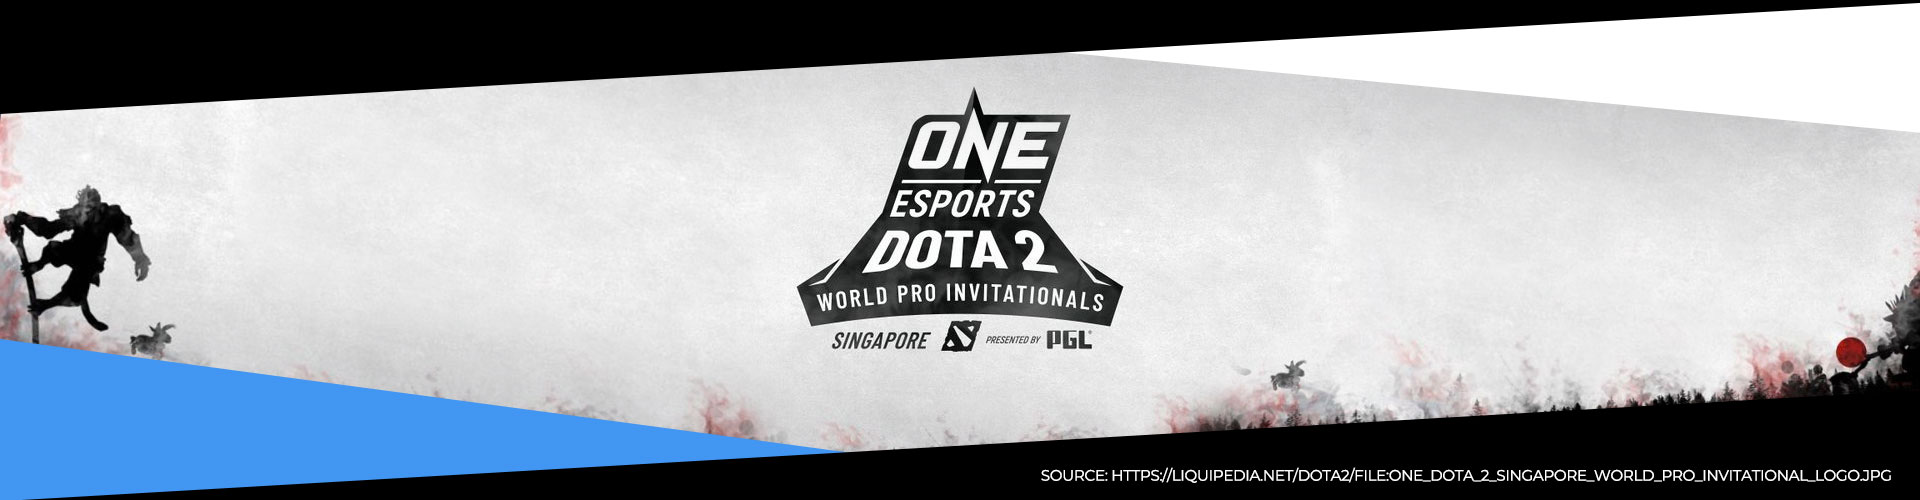 Dota 2 - One Esports Dota 2 World Pro Invitational 2019